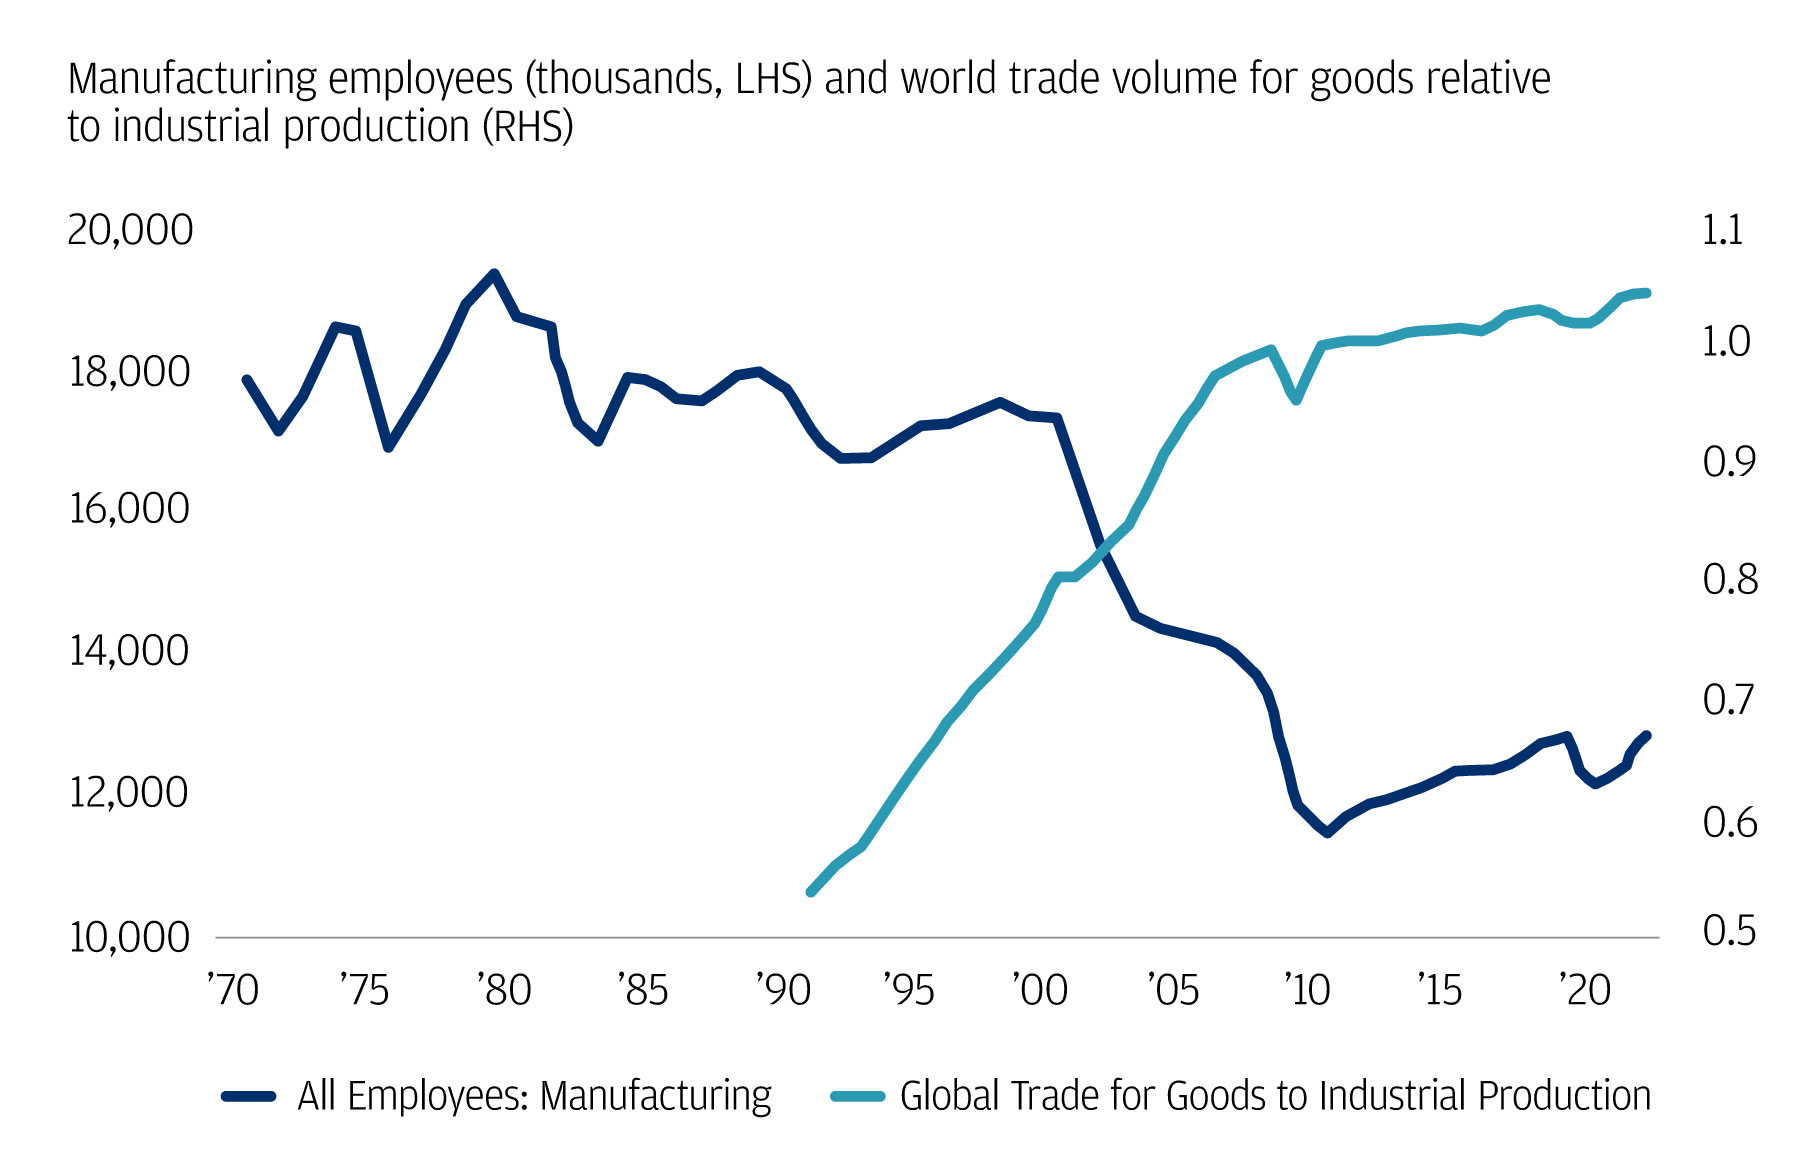 Manufacturing jobs plummeted as global goods trade rose